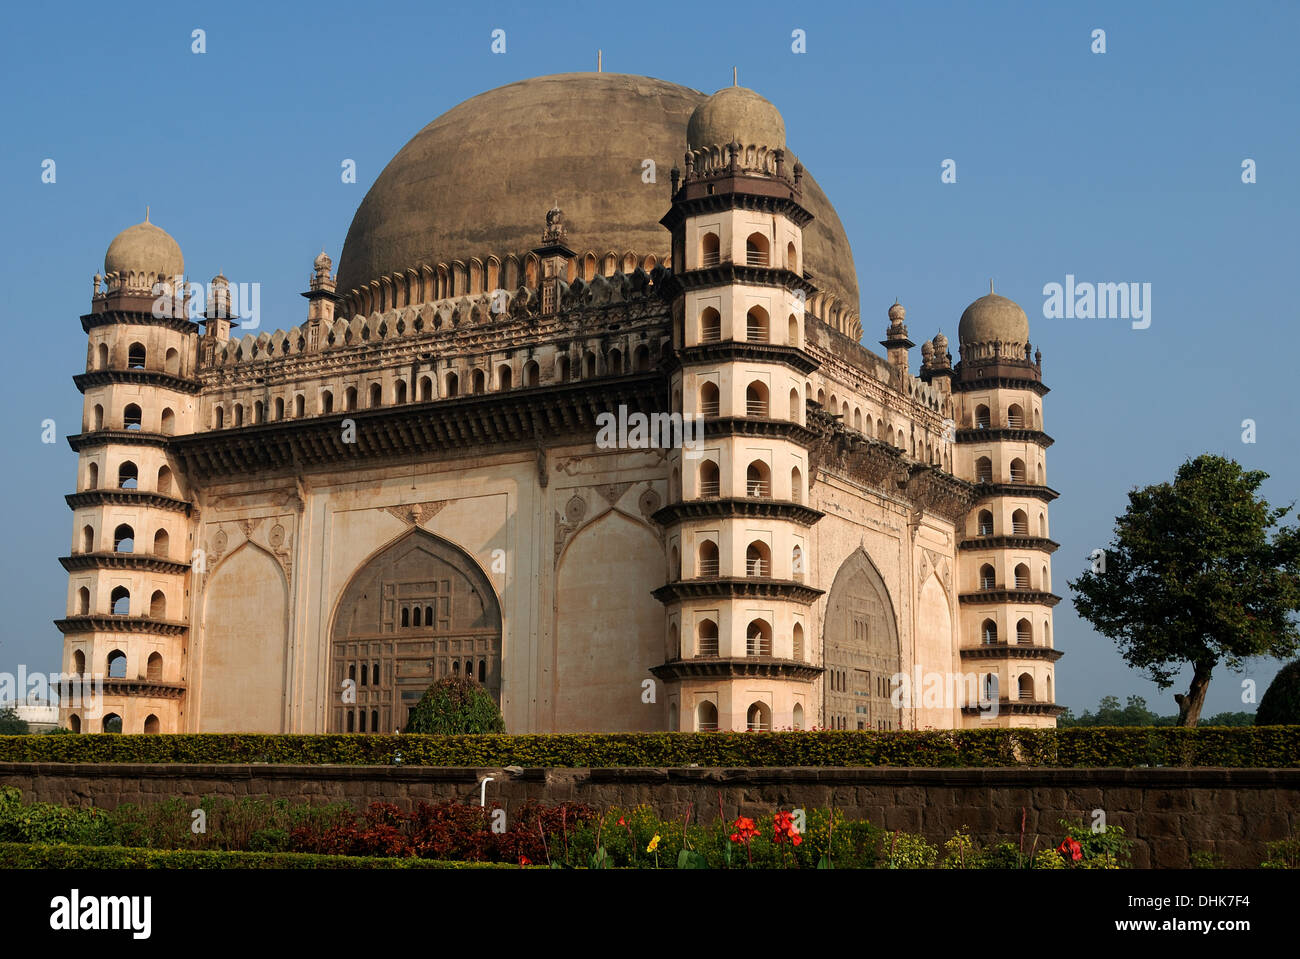 gol gumbaz,bijapur,karnataka.This islamic architecture is the tomb of mohamed adil shah. Stock Photo